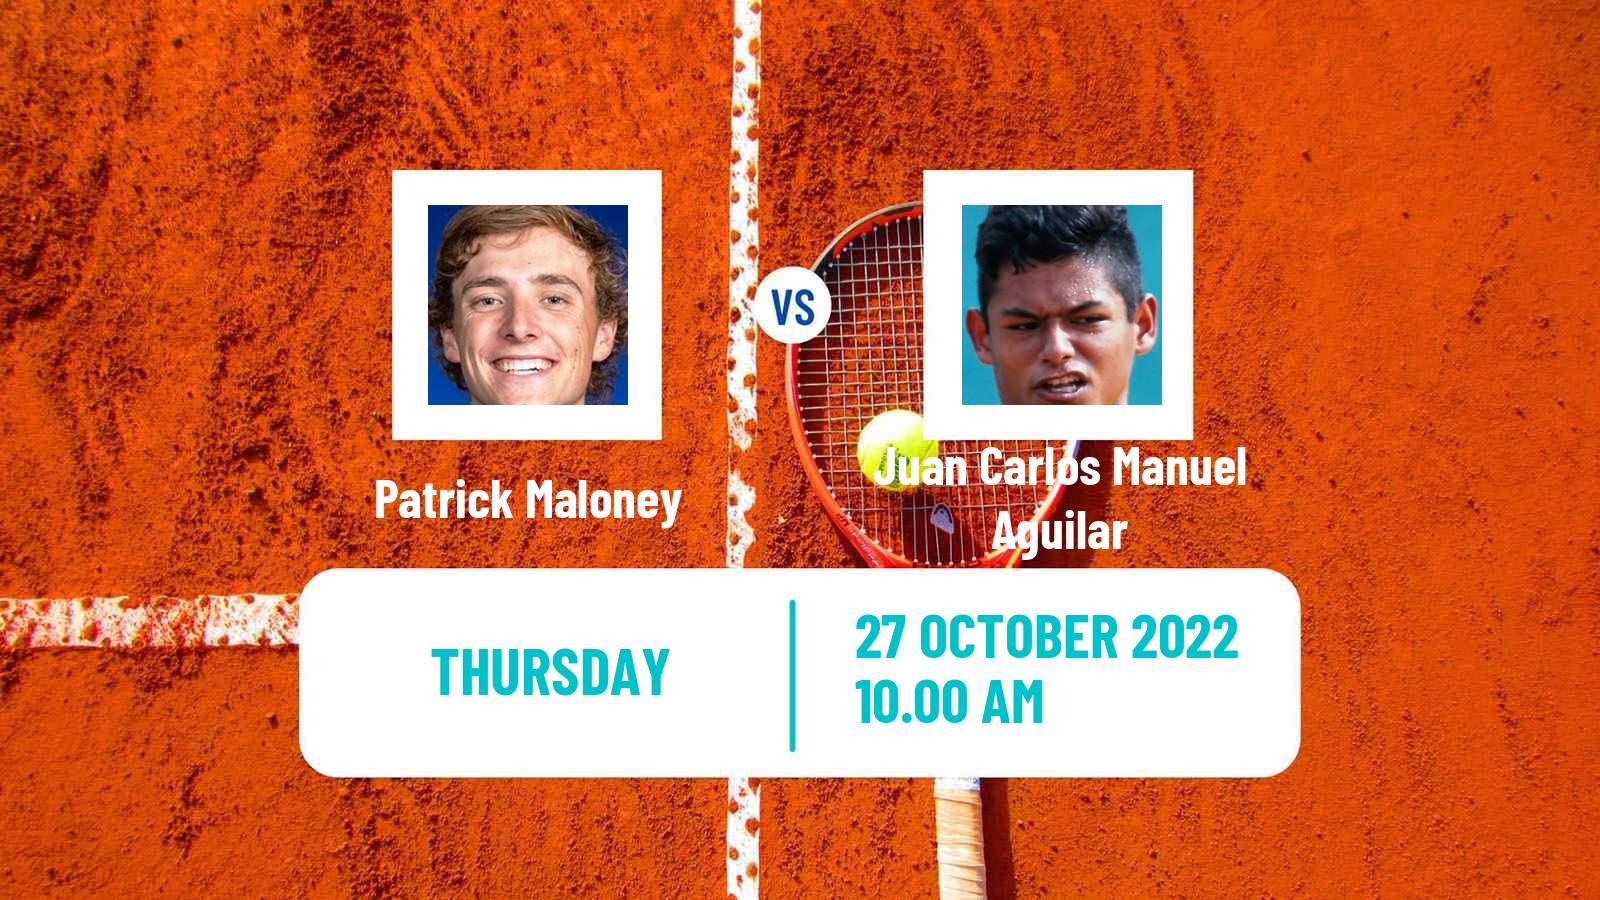 Tennis ITF Tournaments Patrick Maloney - Juan Carlos Manuel Aguilar